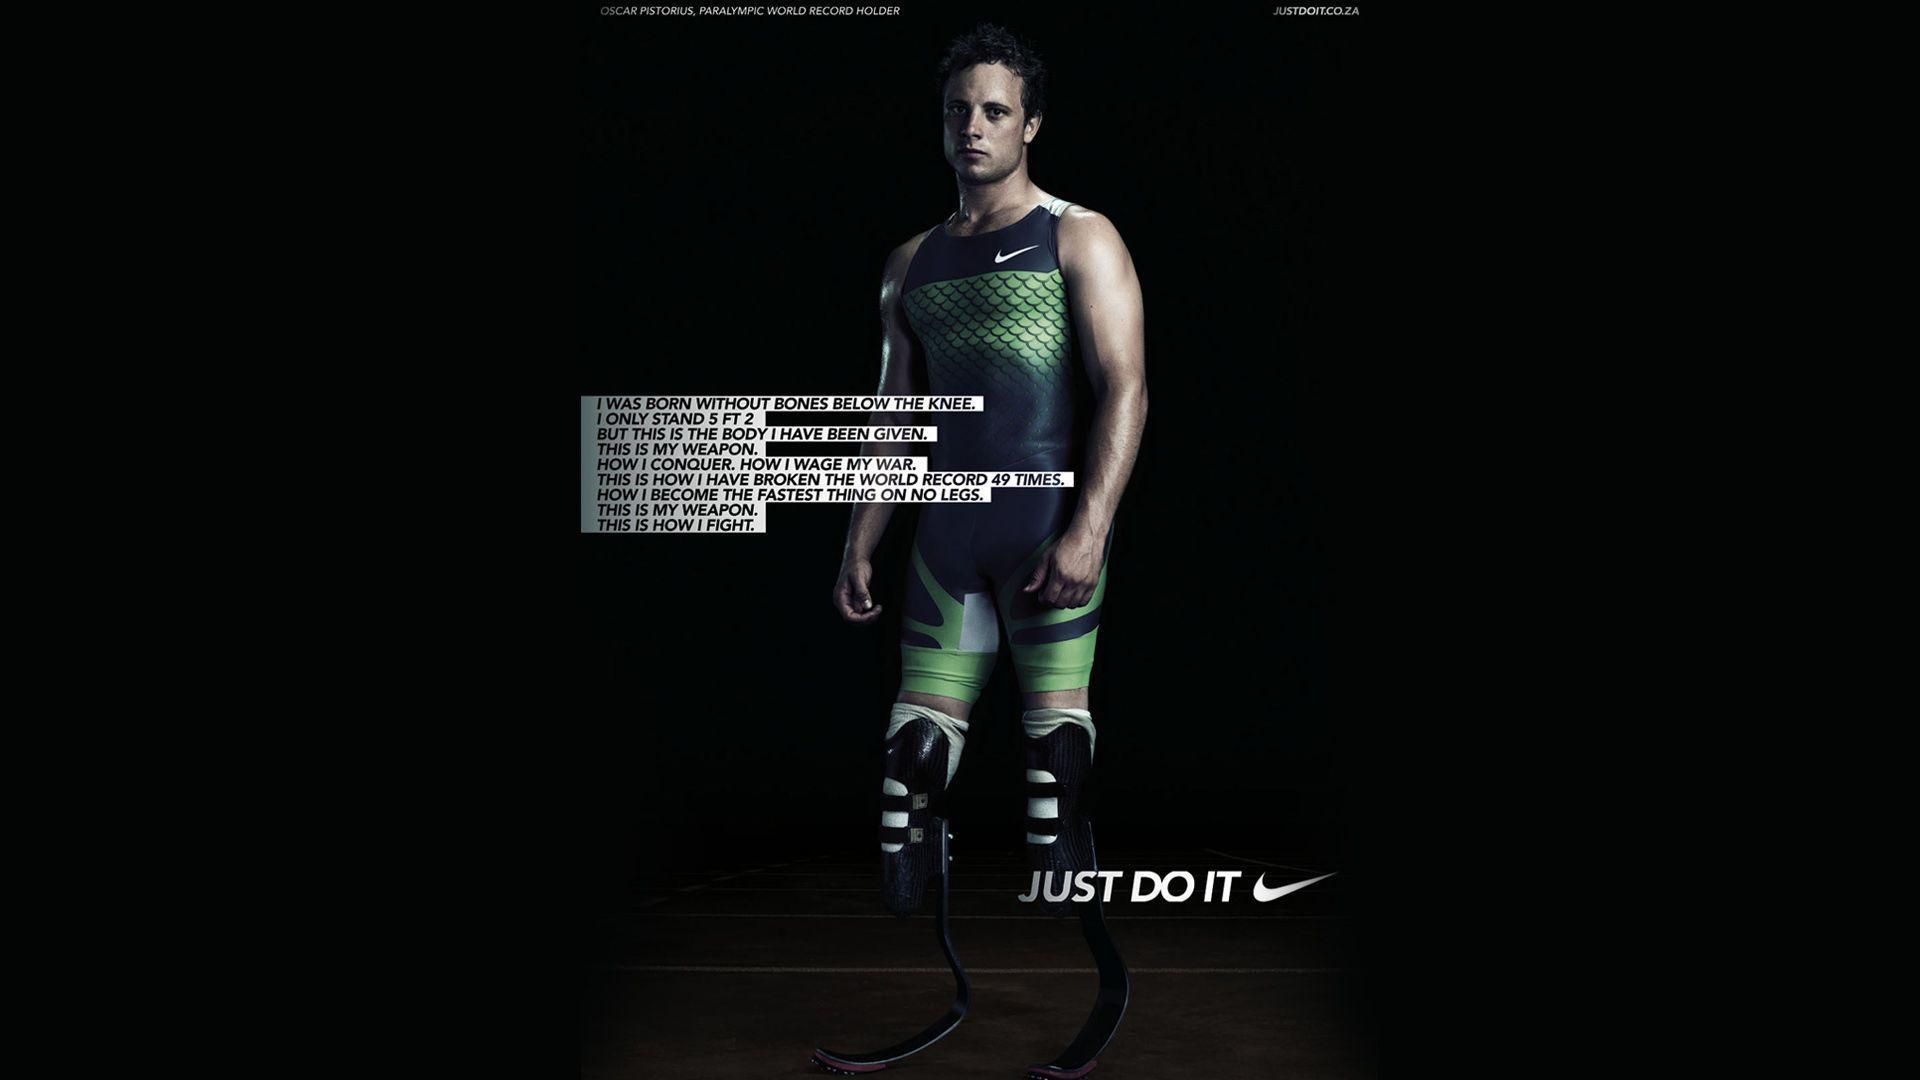 Nike motivation wallpaper